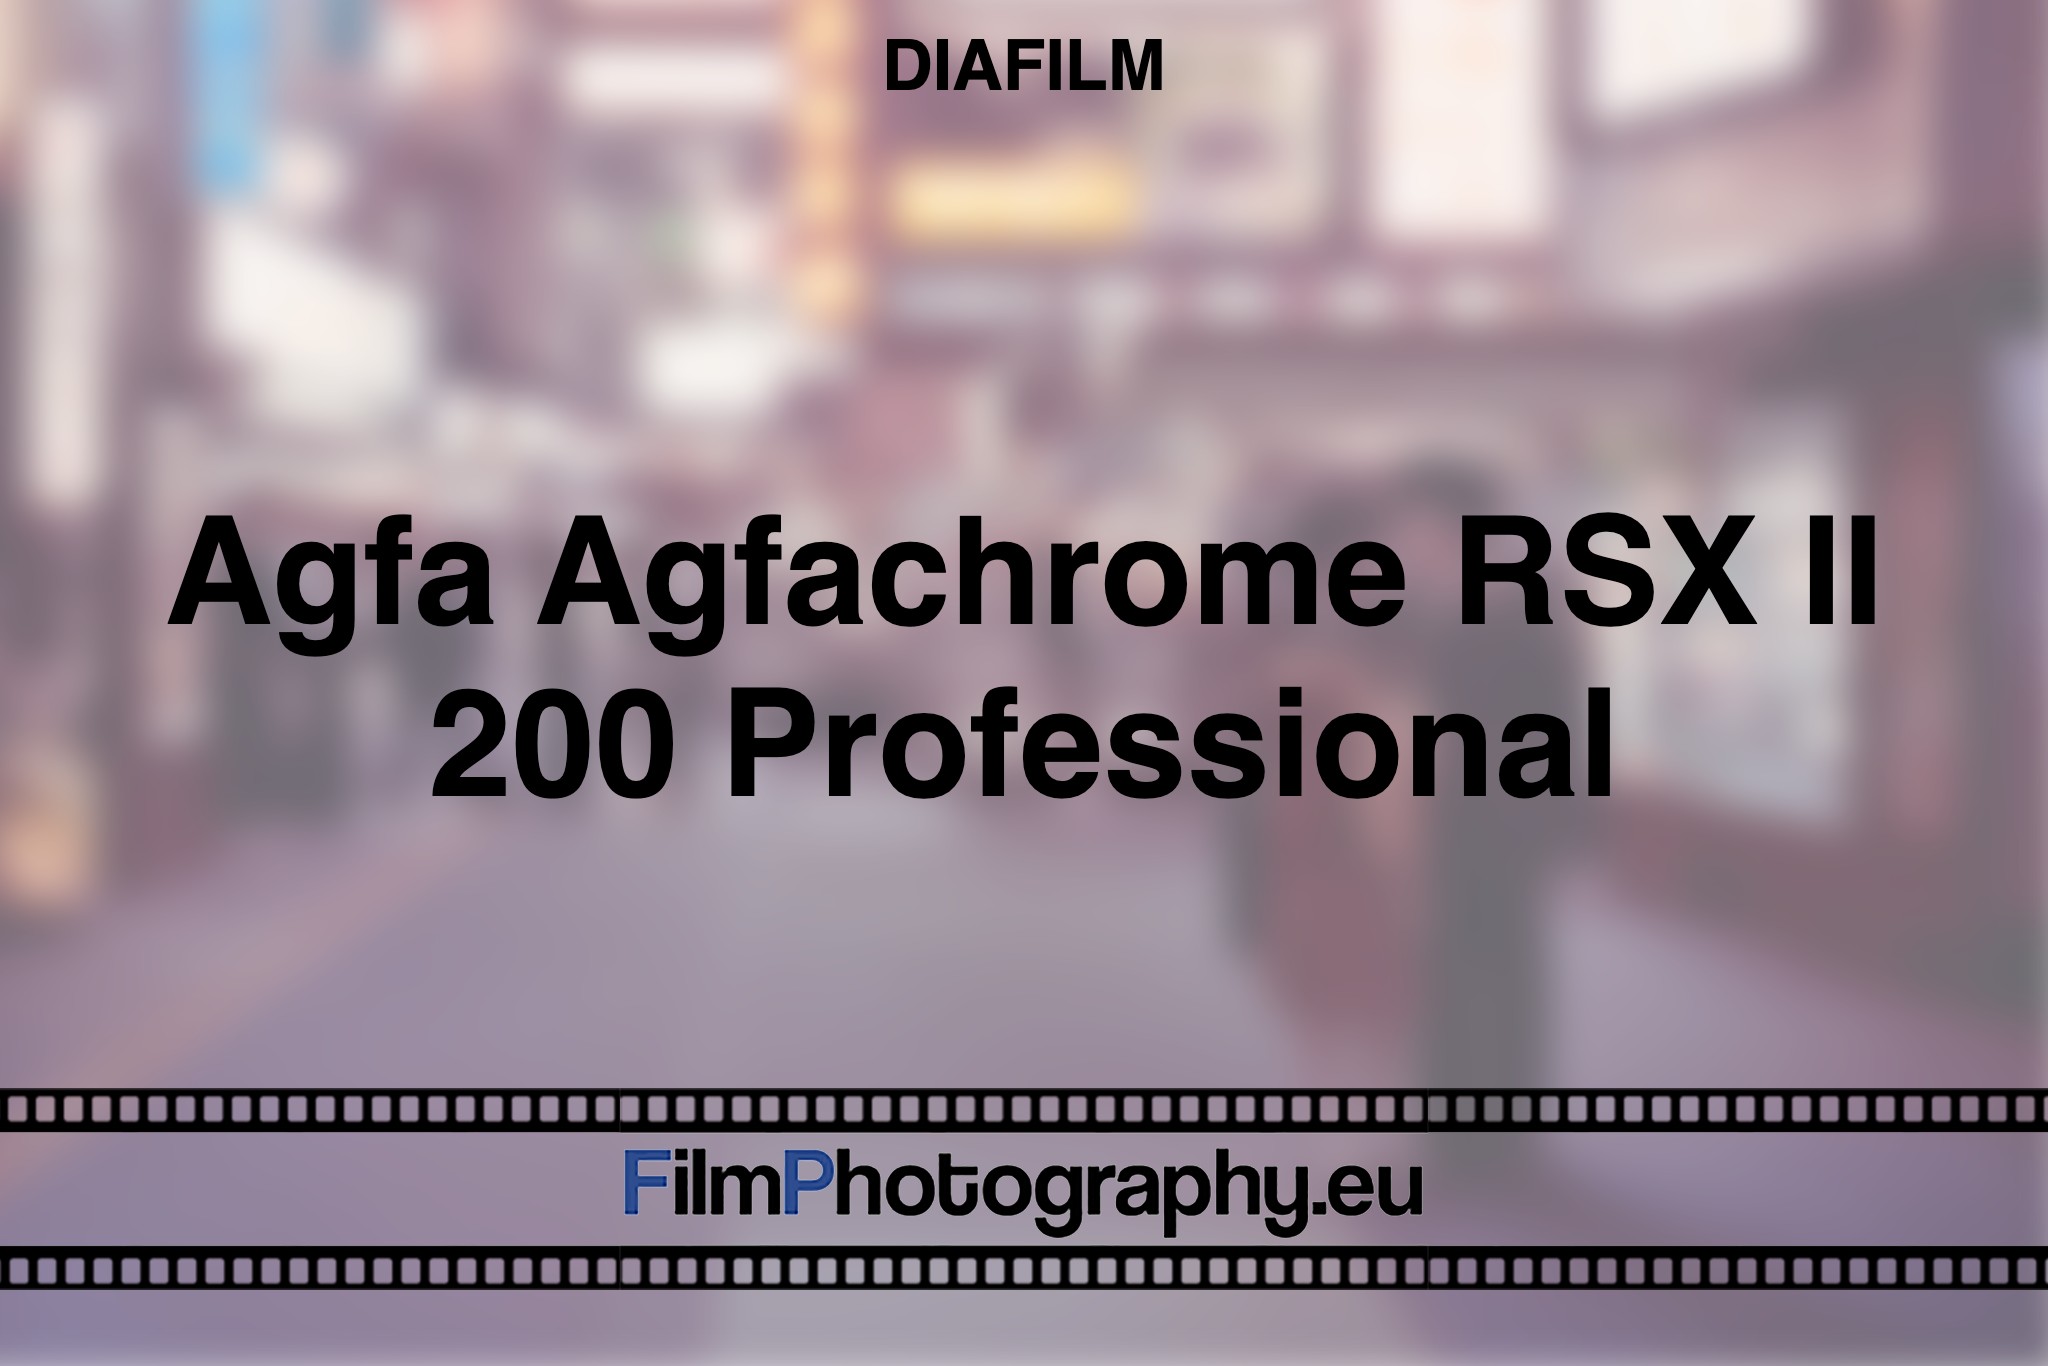 agfa-agfachrome-rsx-ii-200-professional-diafilm-bnv